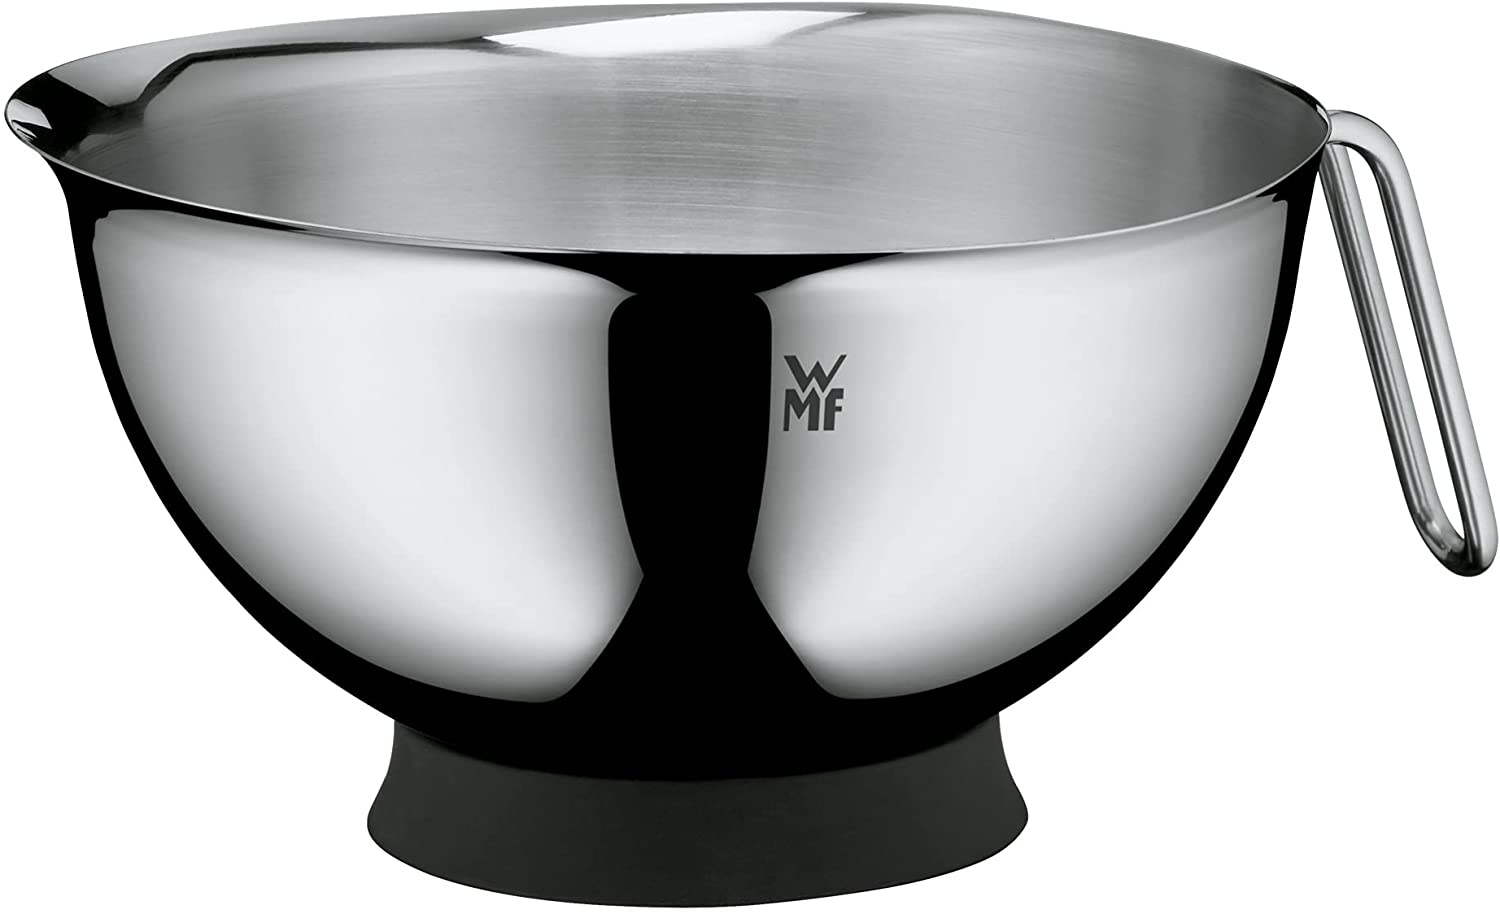 WMF Functional Bowls Rührschüssel, Ø 20 cm